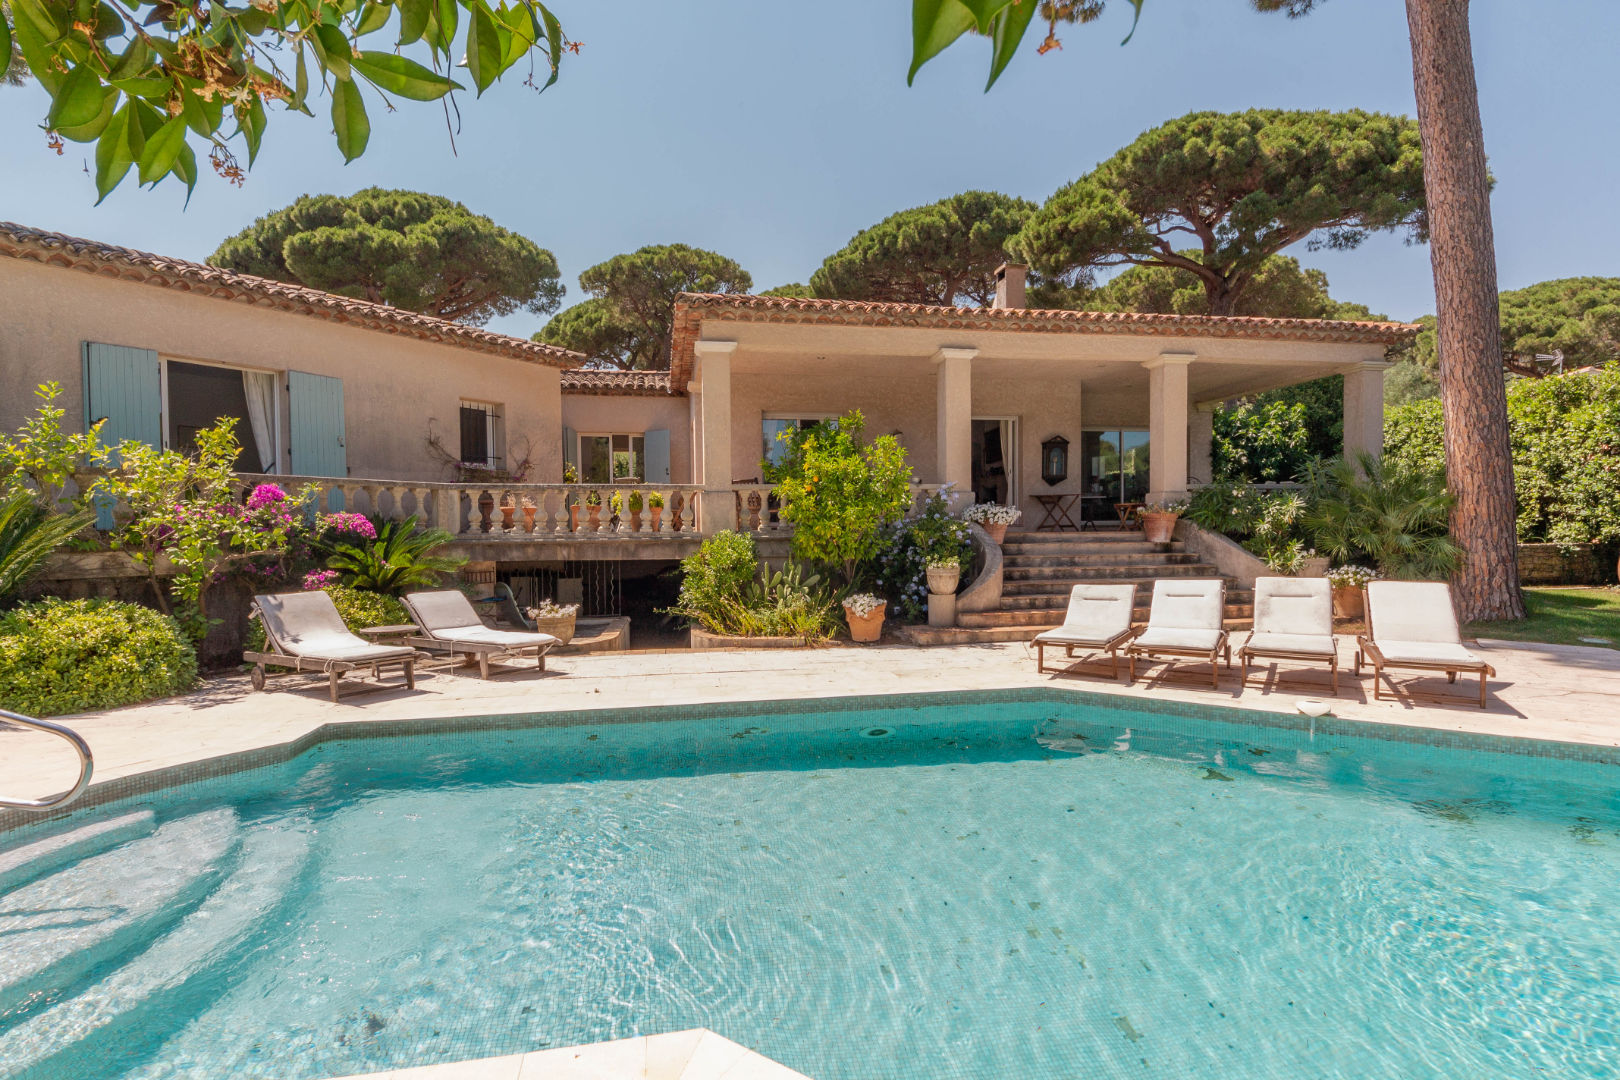 6 bedroom villa for sale Grimaud Gulf of st tropez 320 m²